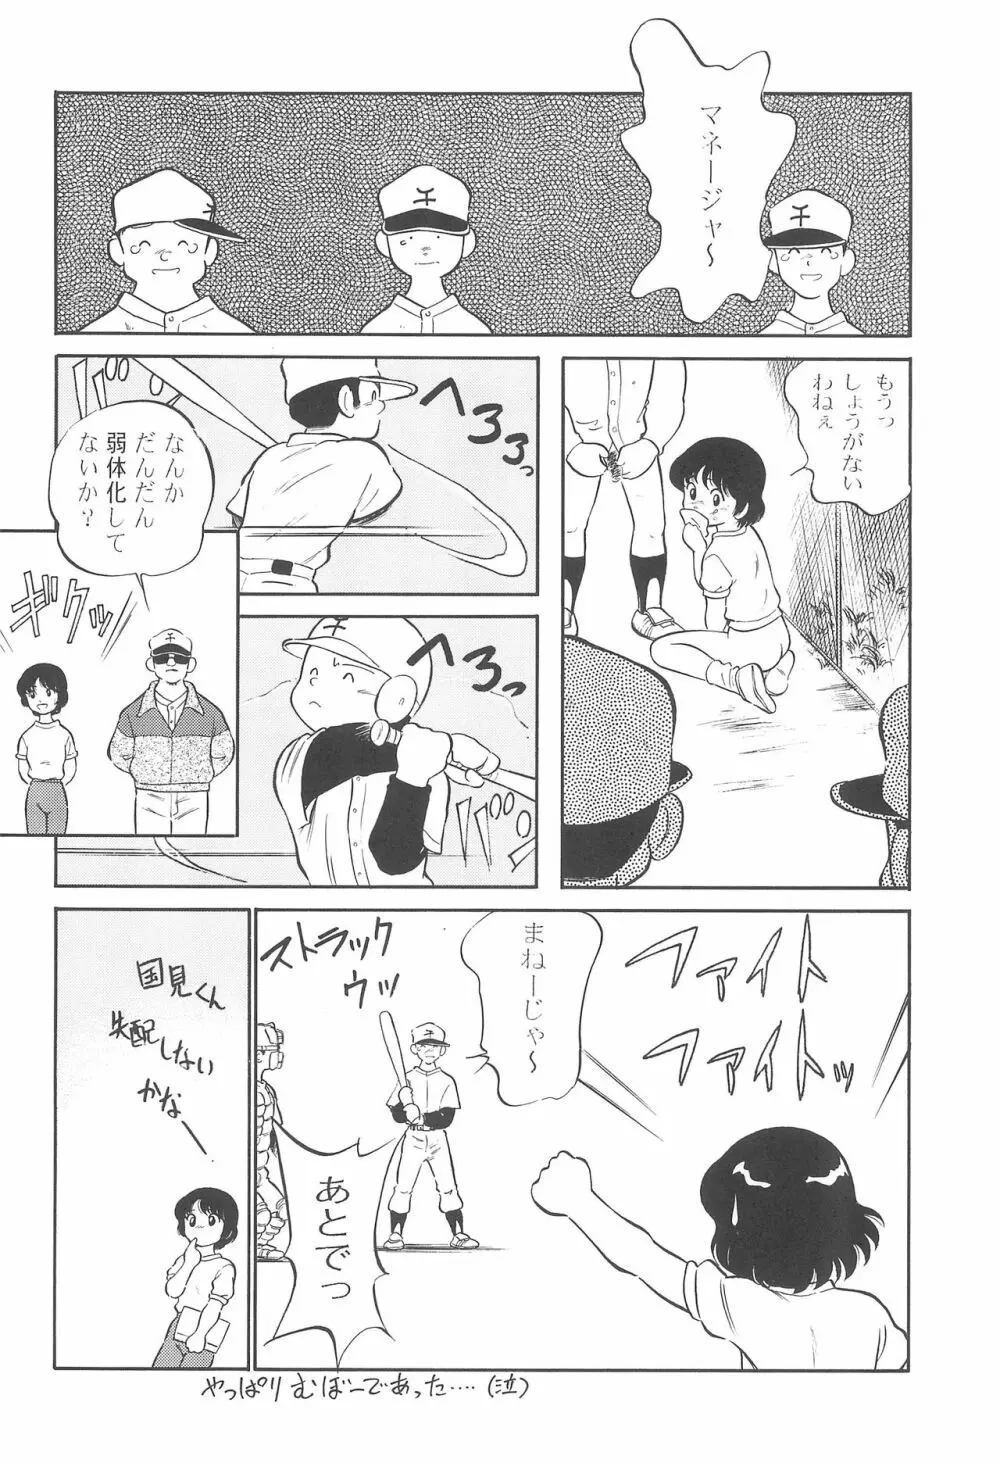 闘争心 - page27